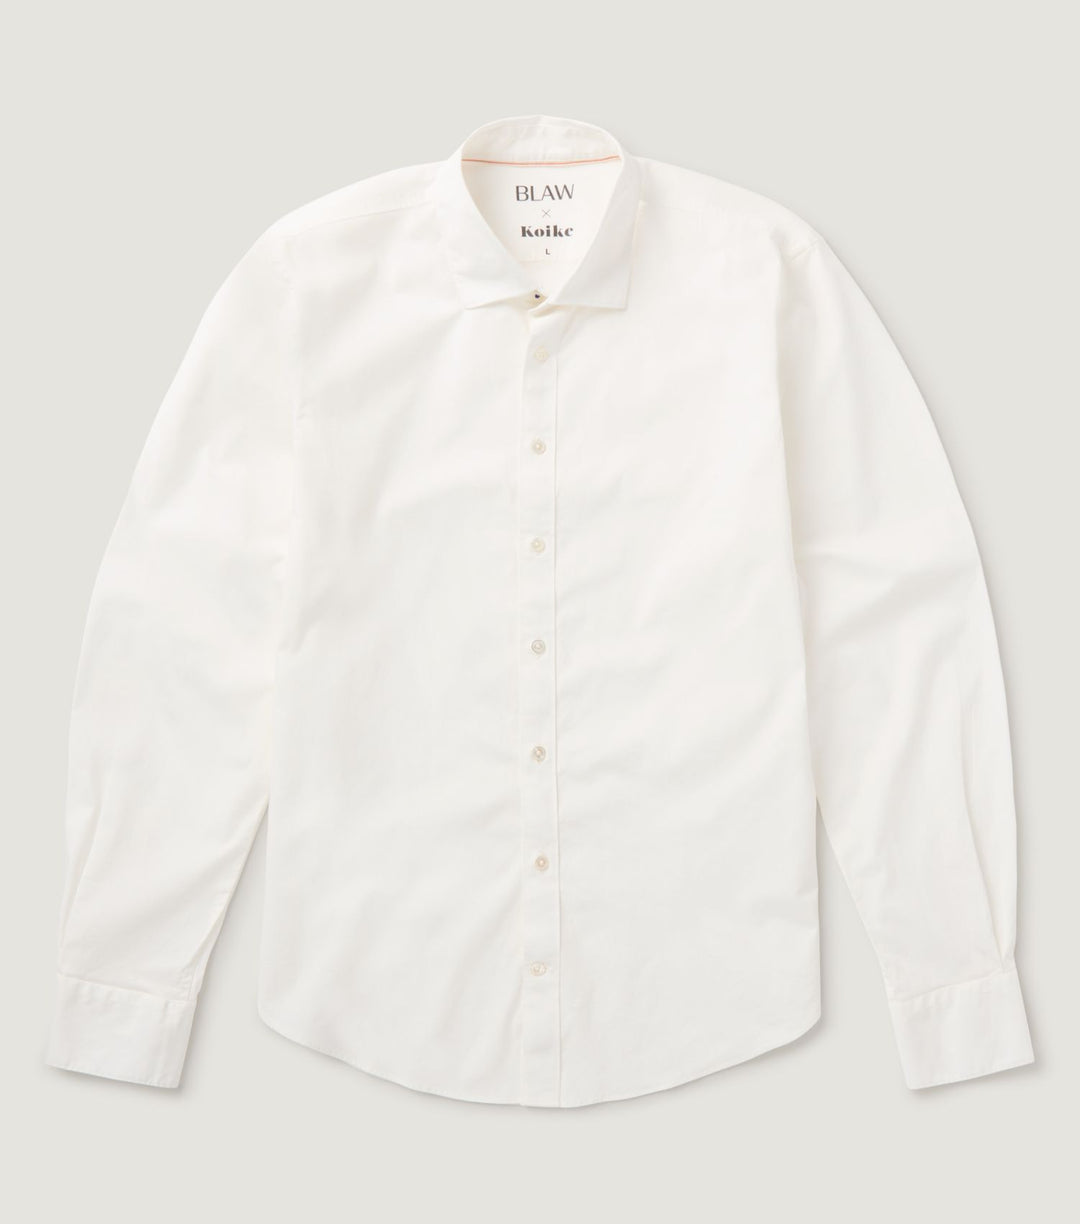 Garment dye Popelin Strech Spread collar Shirt White - BLAW